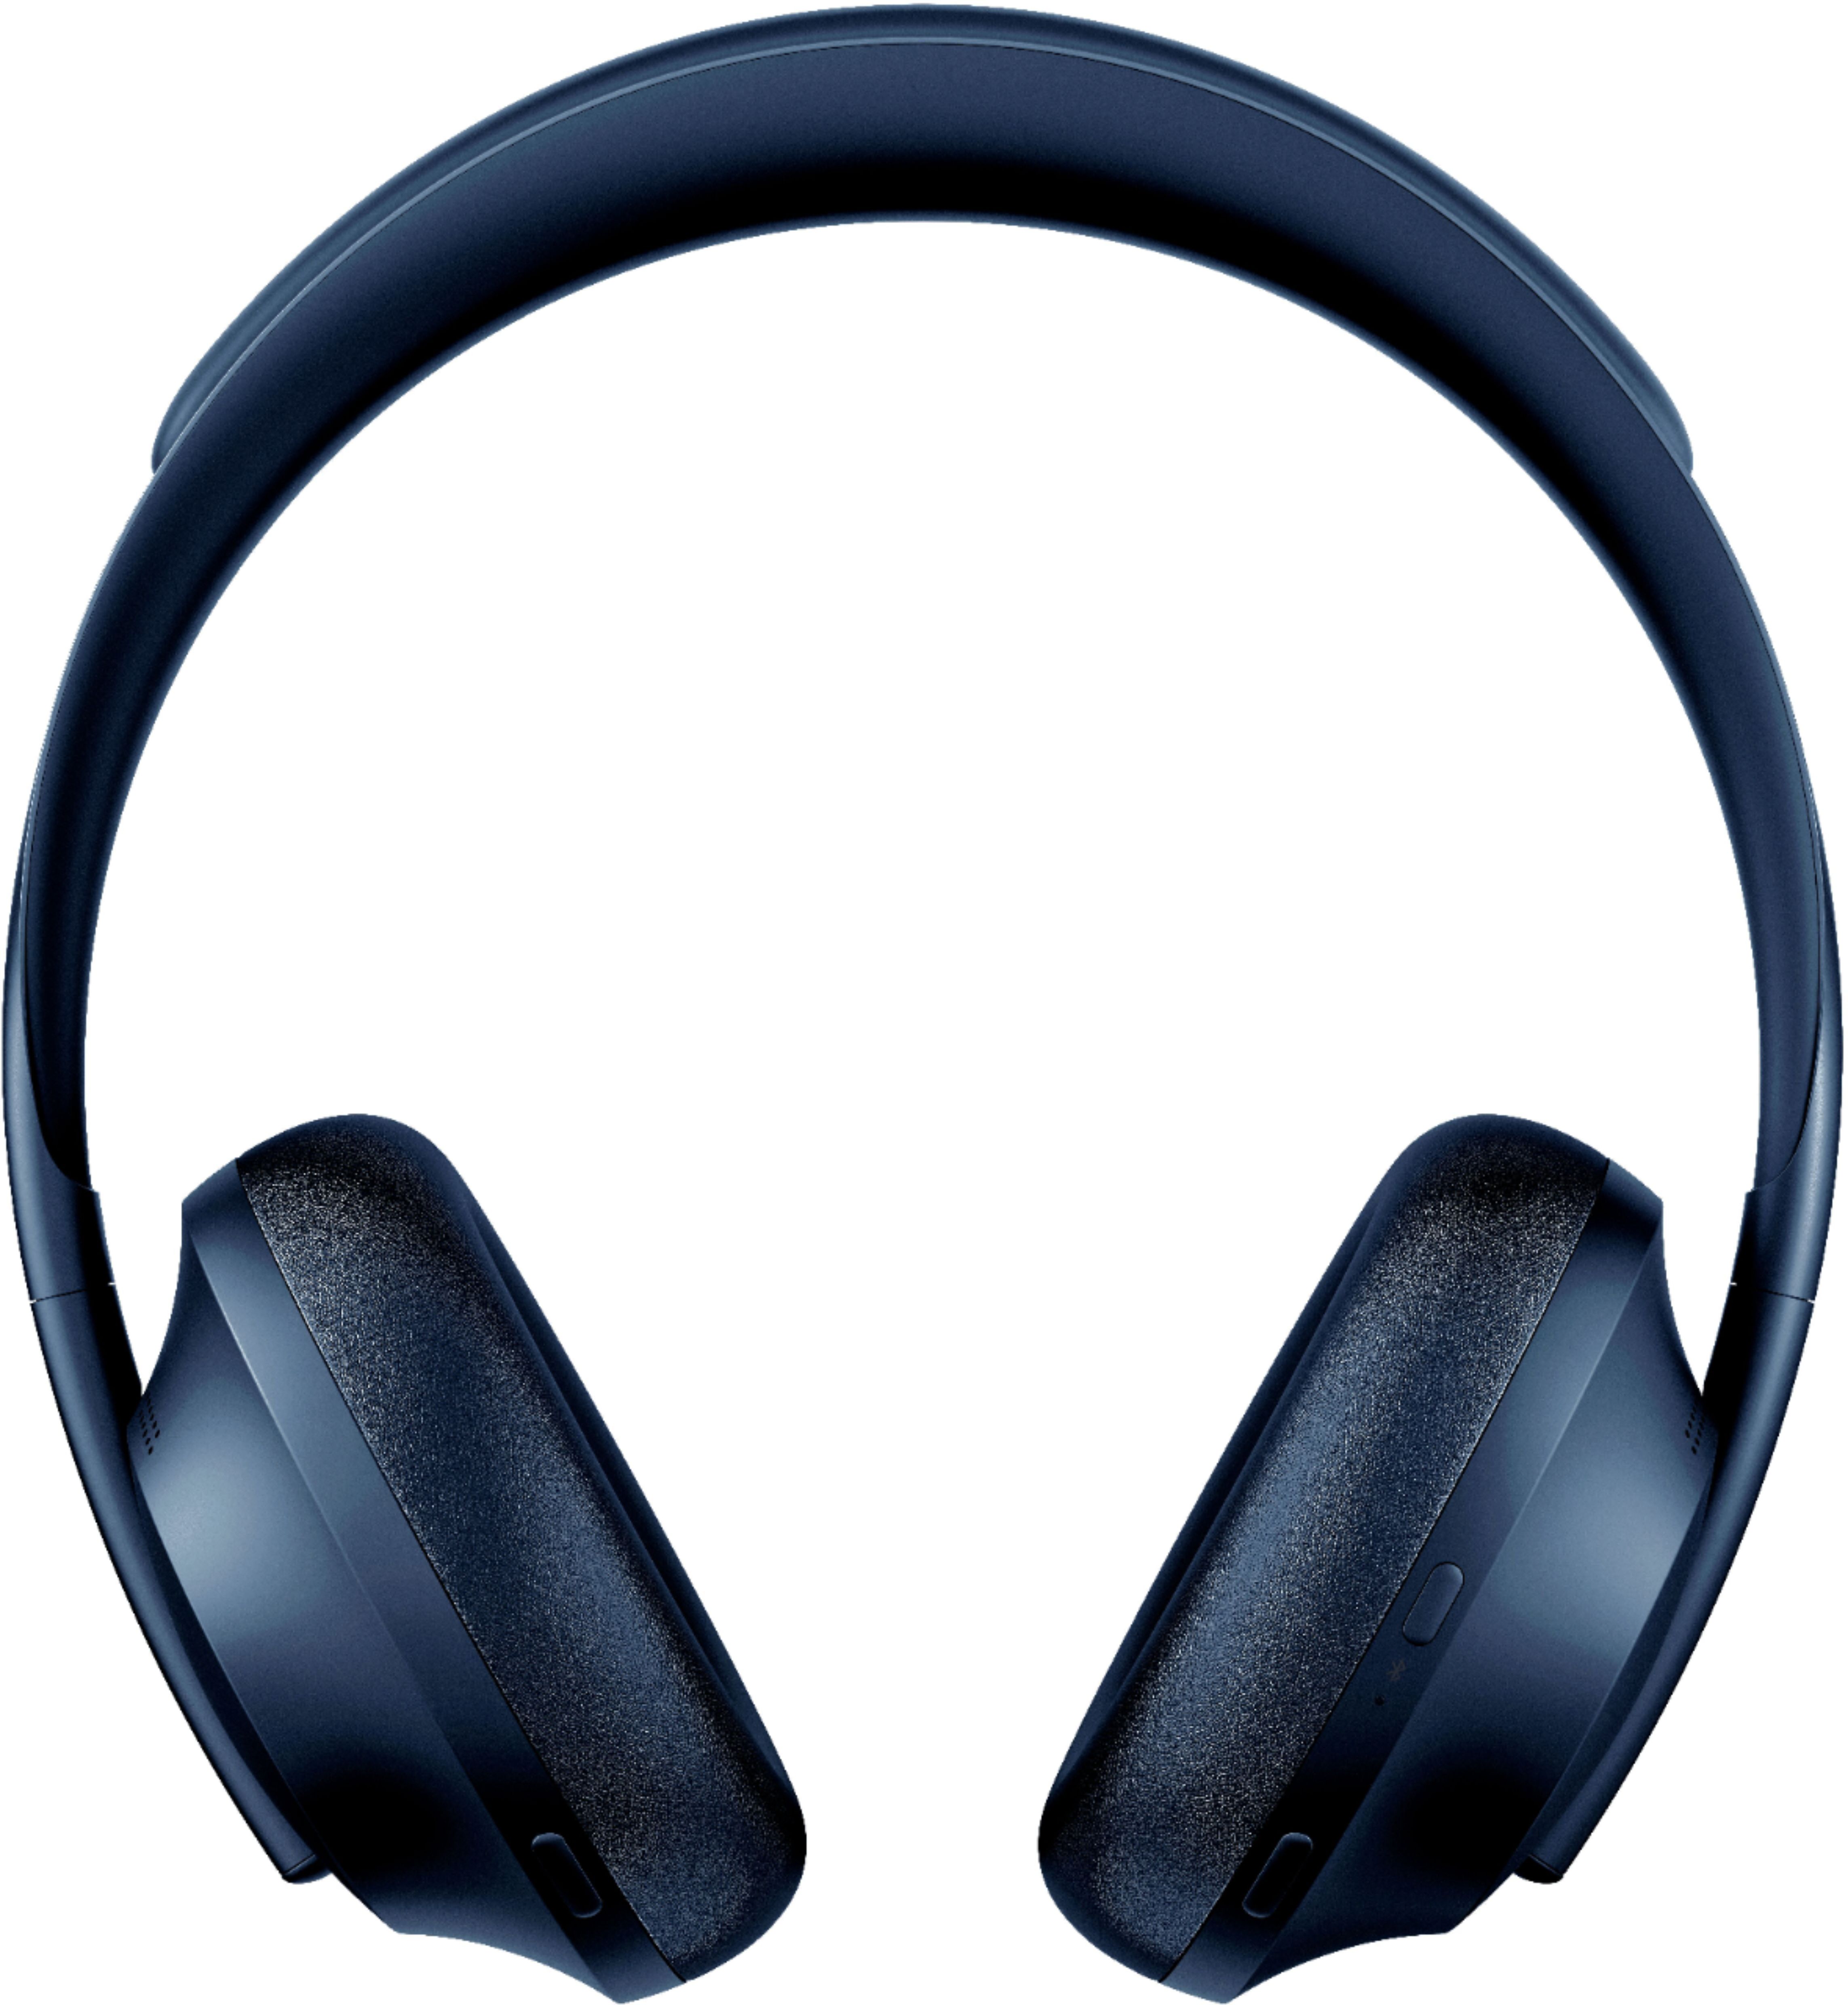 Comparer les prix : Casque audio Bose Bose Headphone 700 Midnight blue